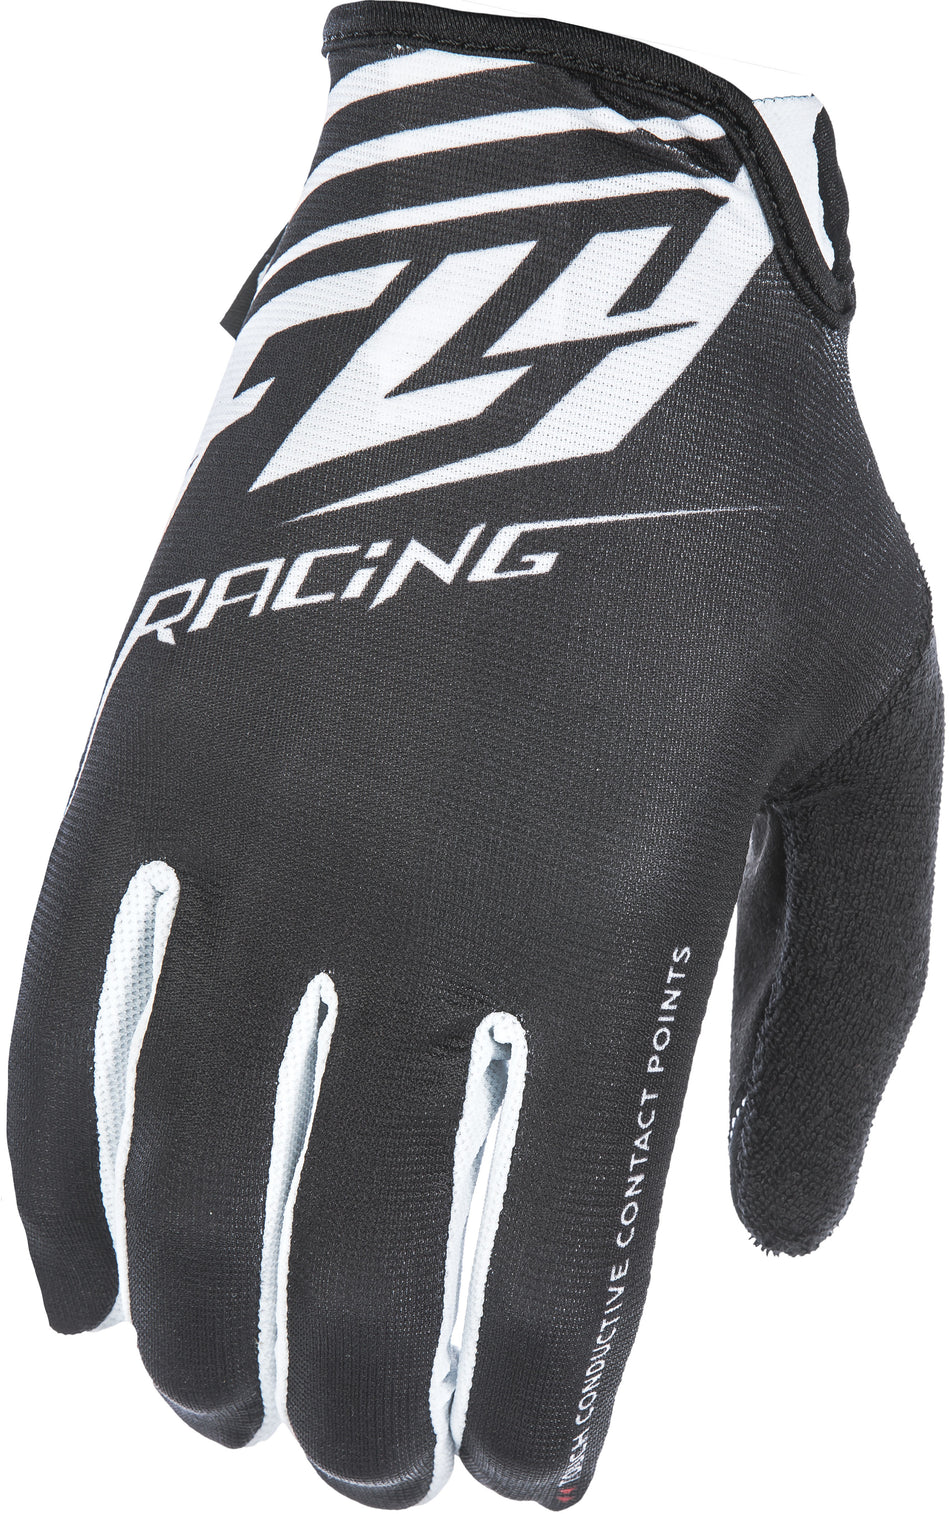 FLY RACING Media Gloves Black/White Sz 10 350-07410